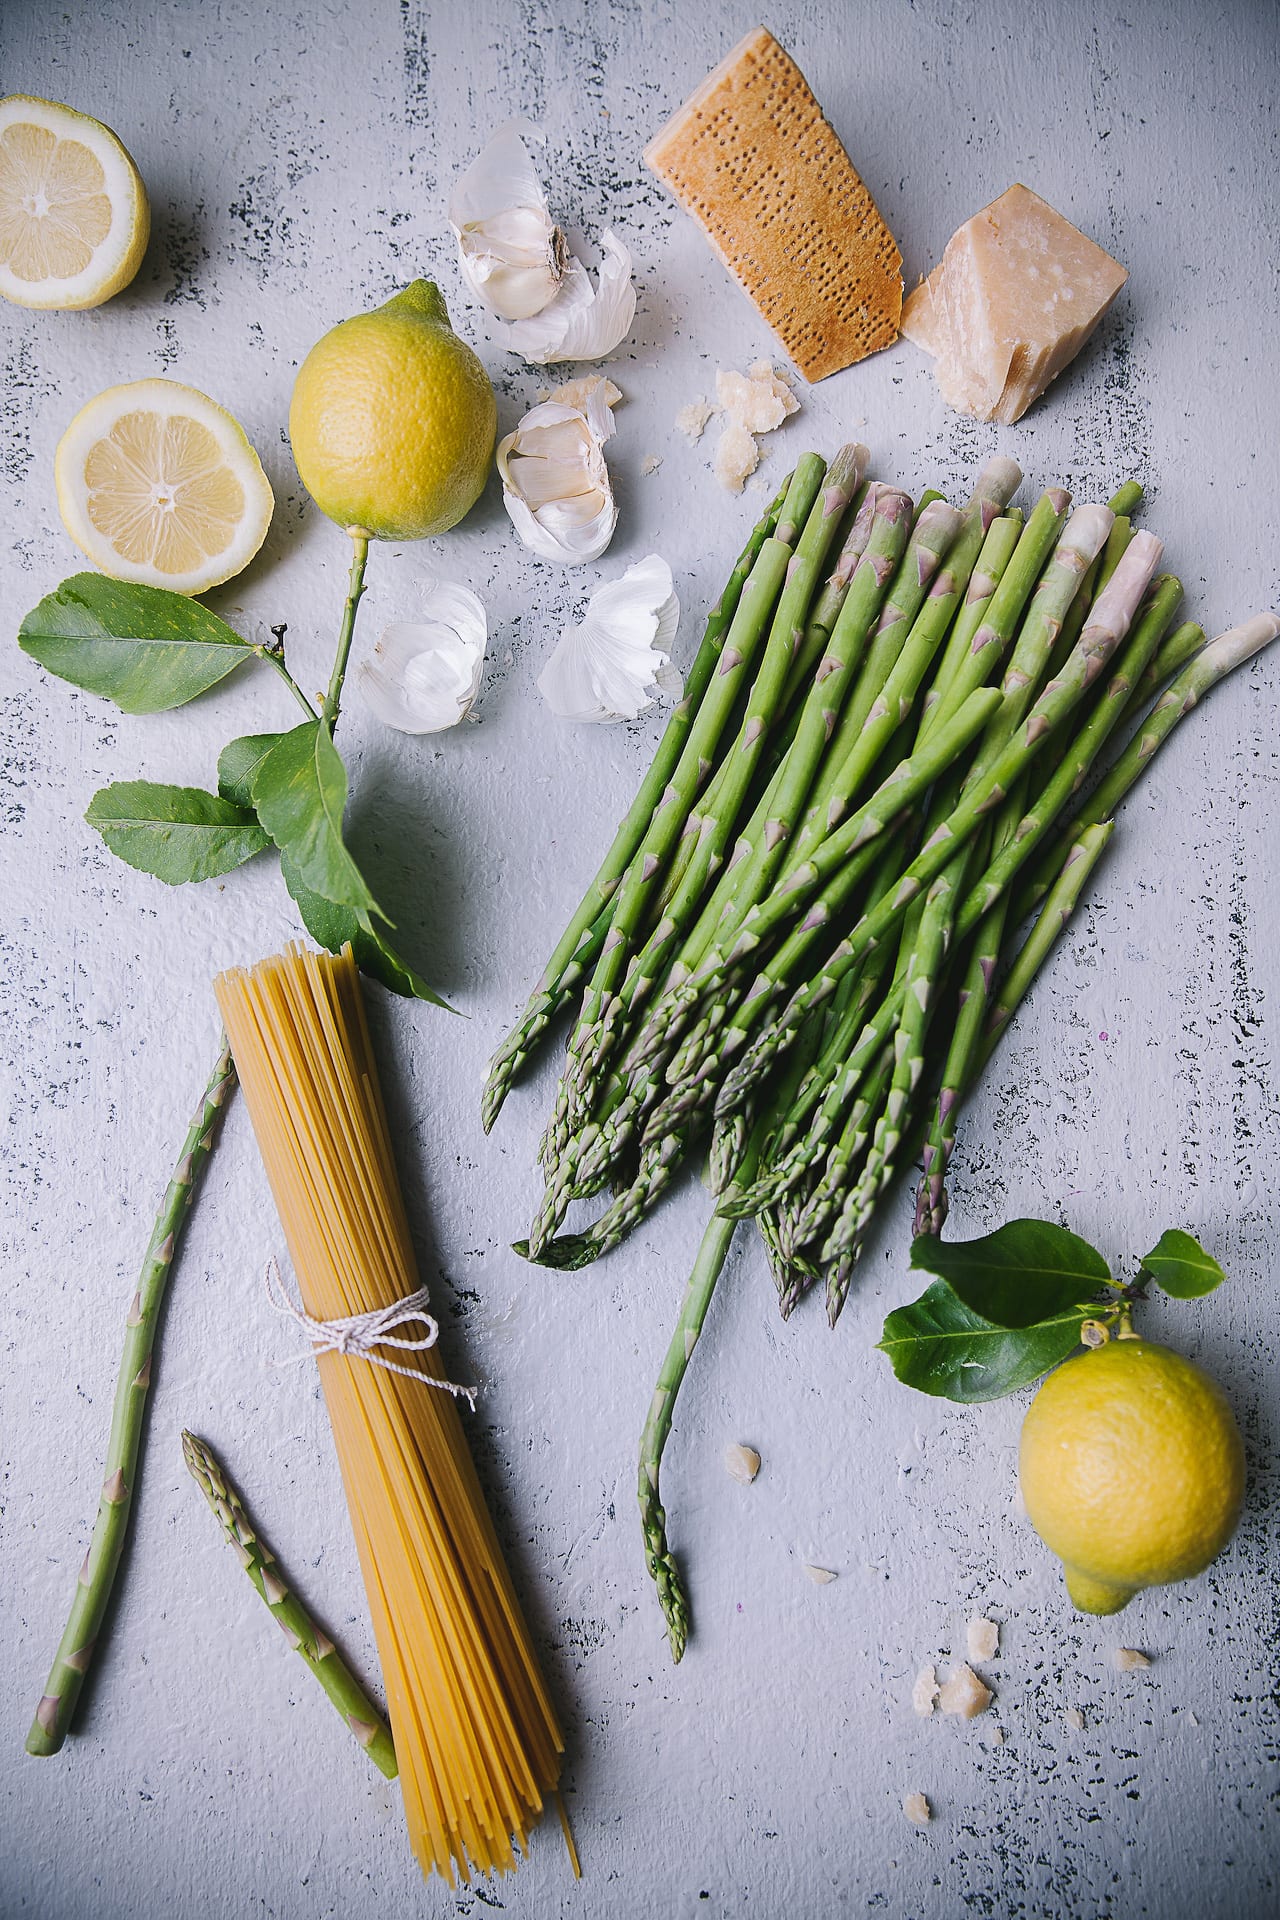 Ingredient shots for Asparagus Spaghetti (Pasta with Asparagus) #foodphotography #pasta #photography #noodles #spaghetti #easy #5ingredients